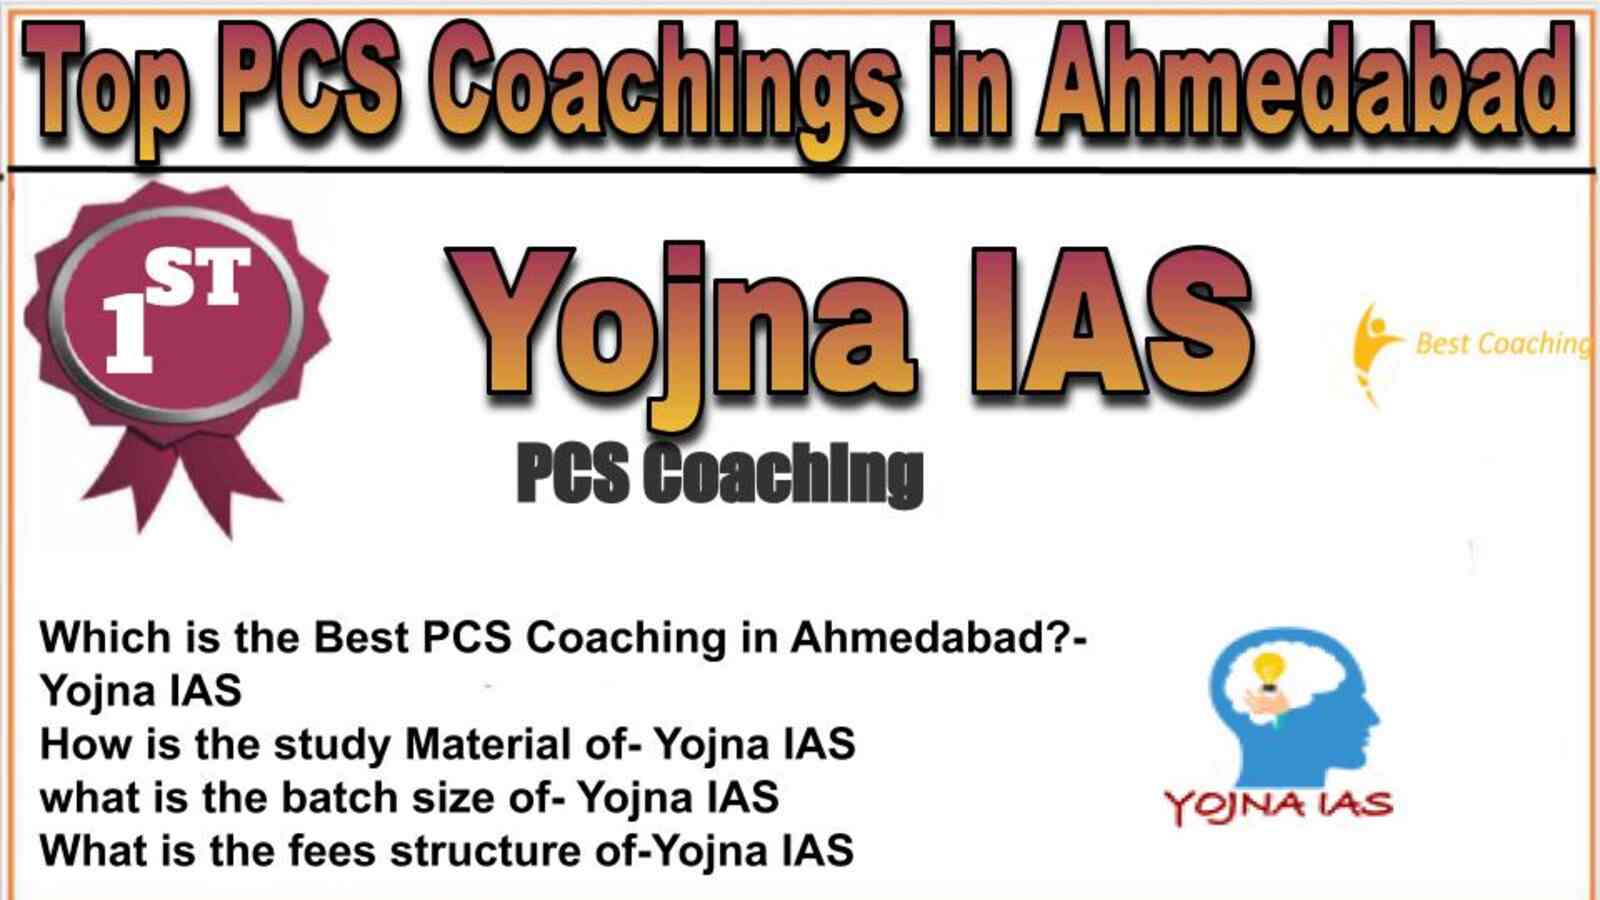 Rank 1 top PCS coachings in Ahmedabad